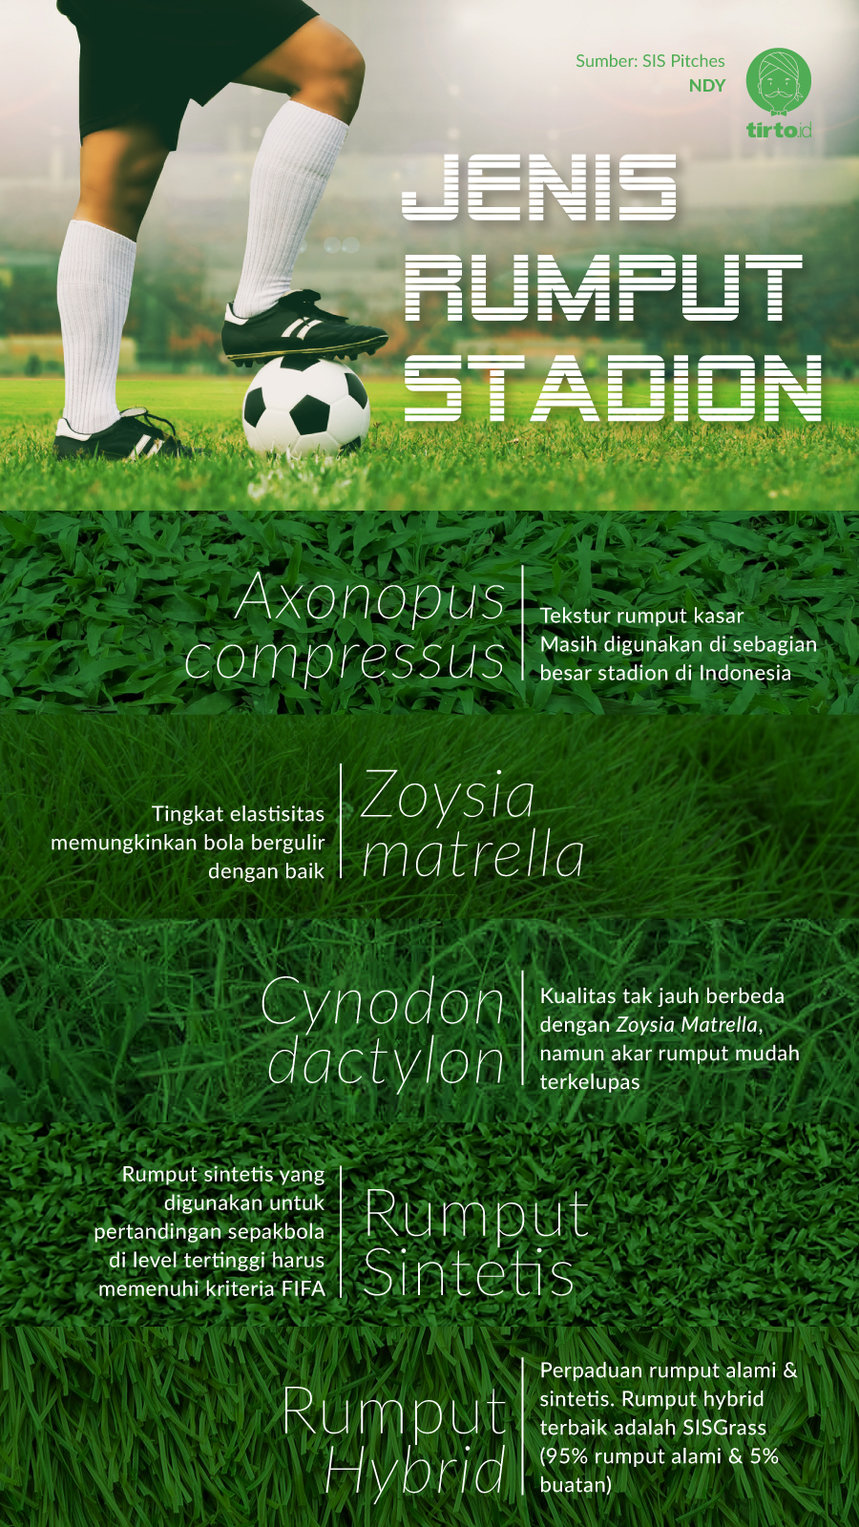 INfografik Jenis rumput stadion